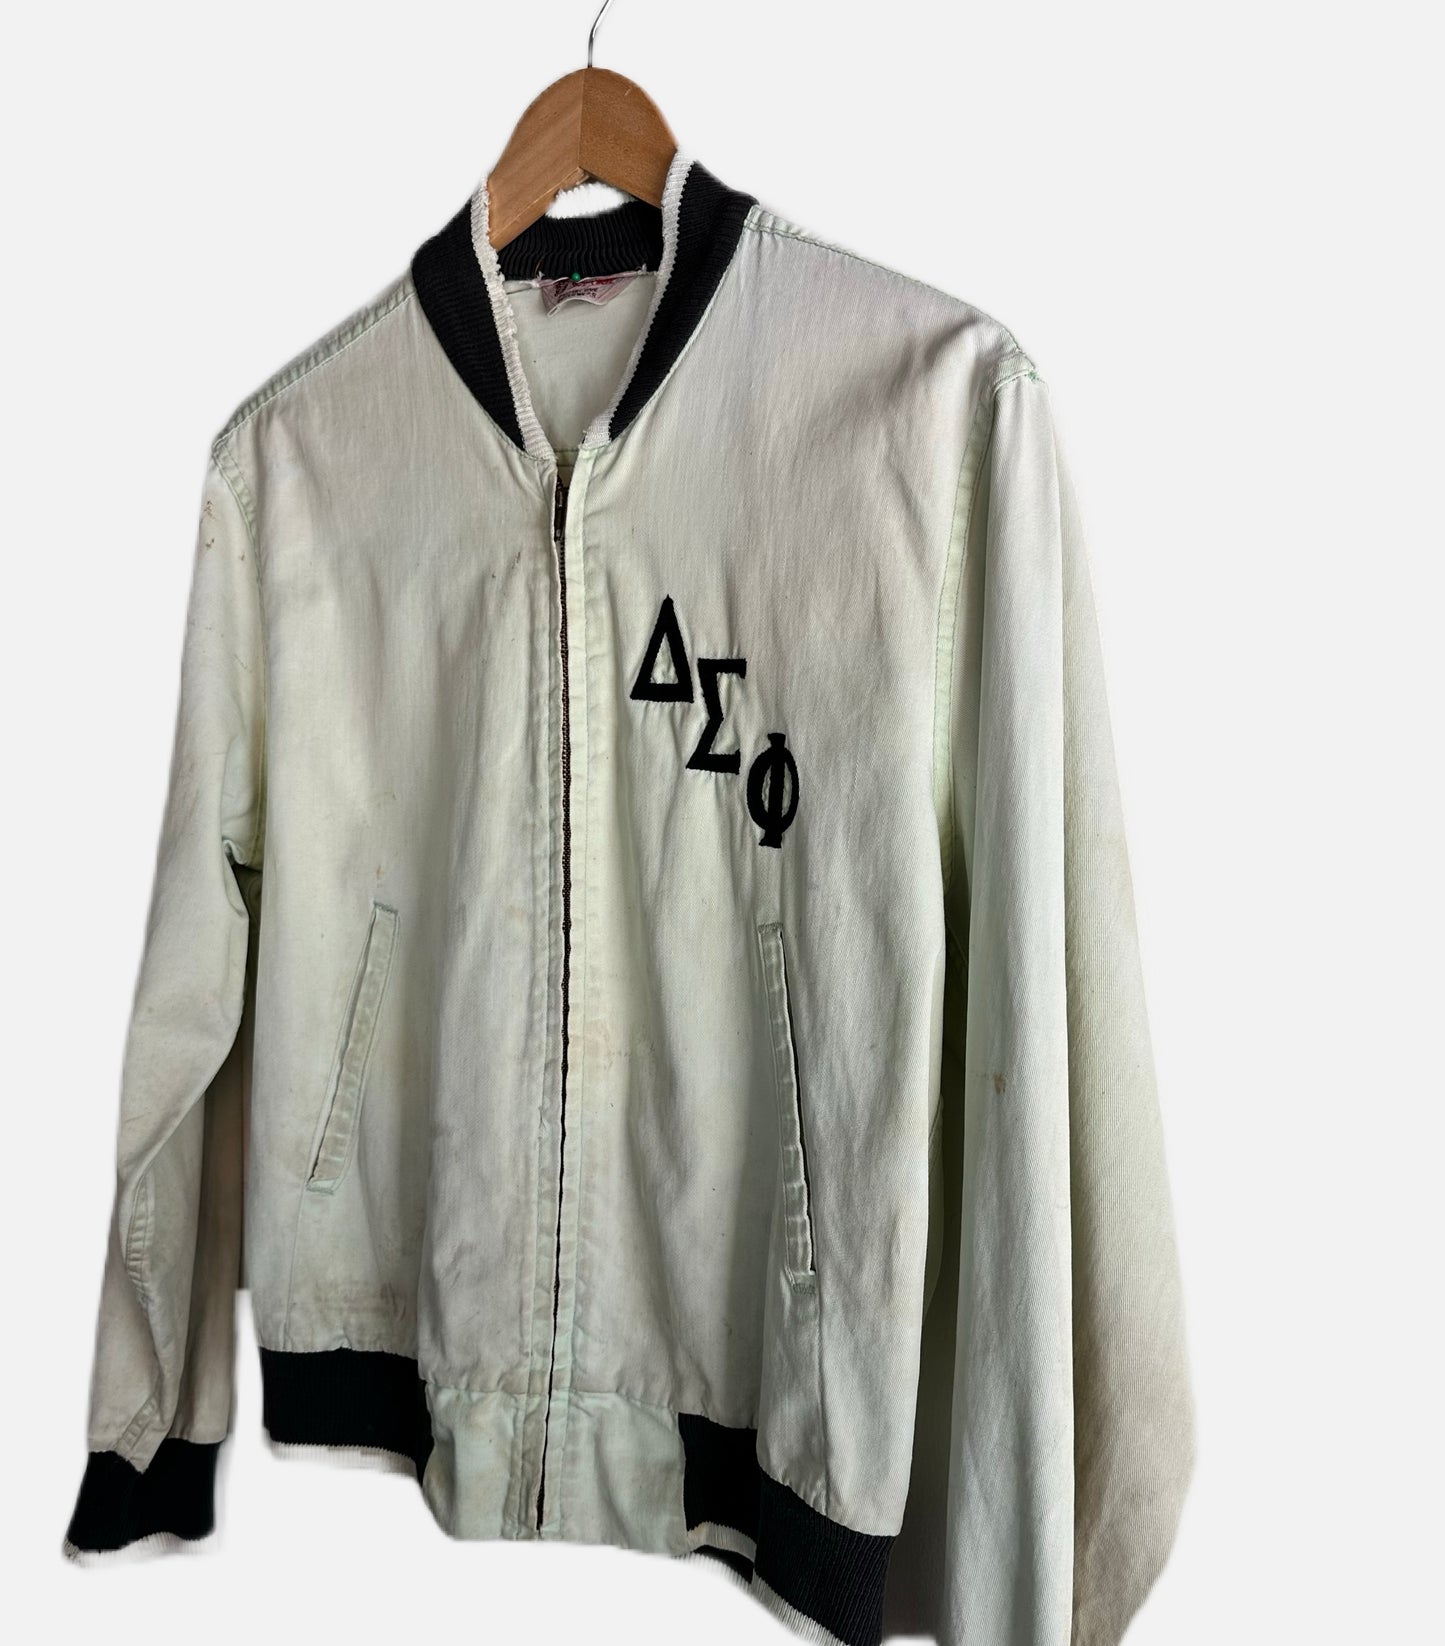 1950s "Alpha Sigma Phi" Fraternity Jacket